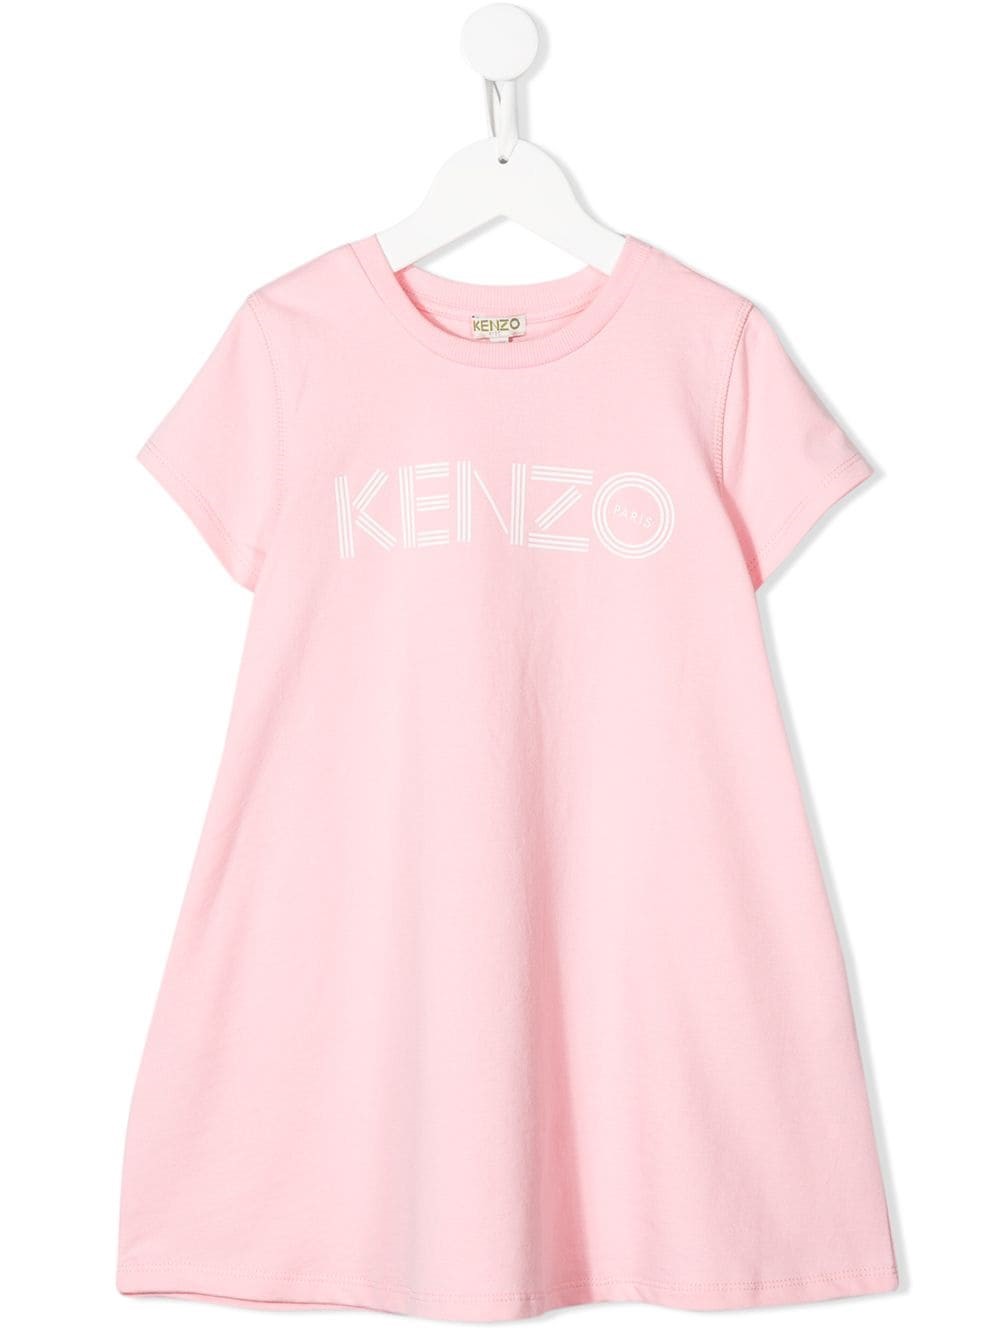 kenzo baby dress